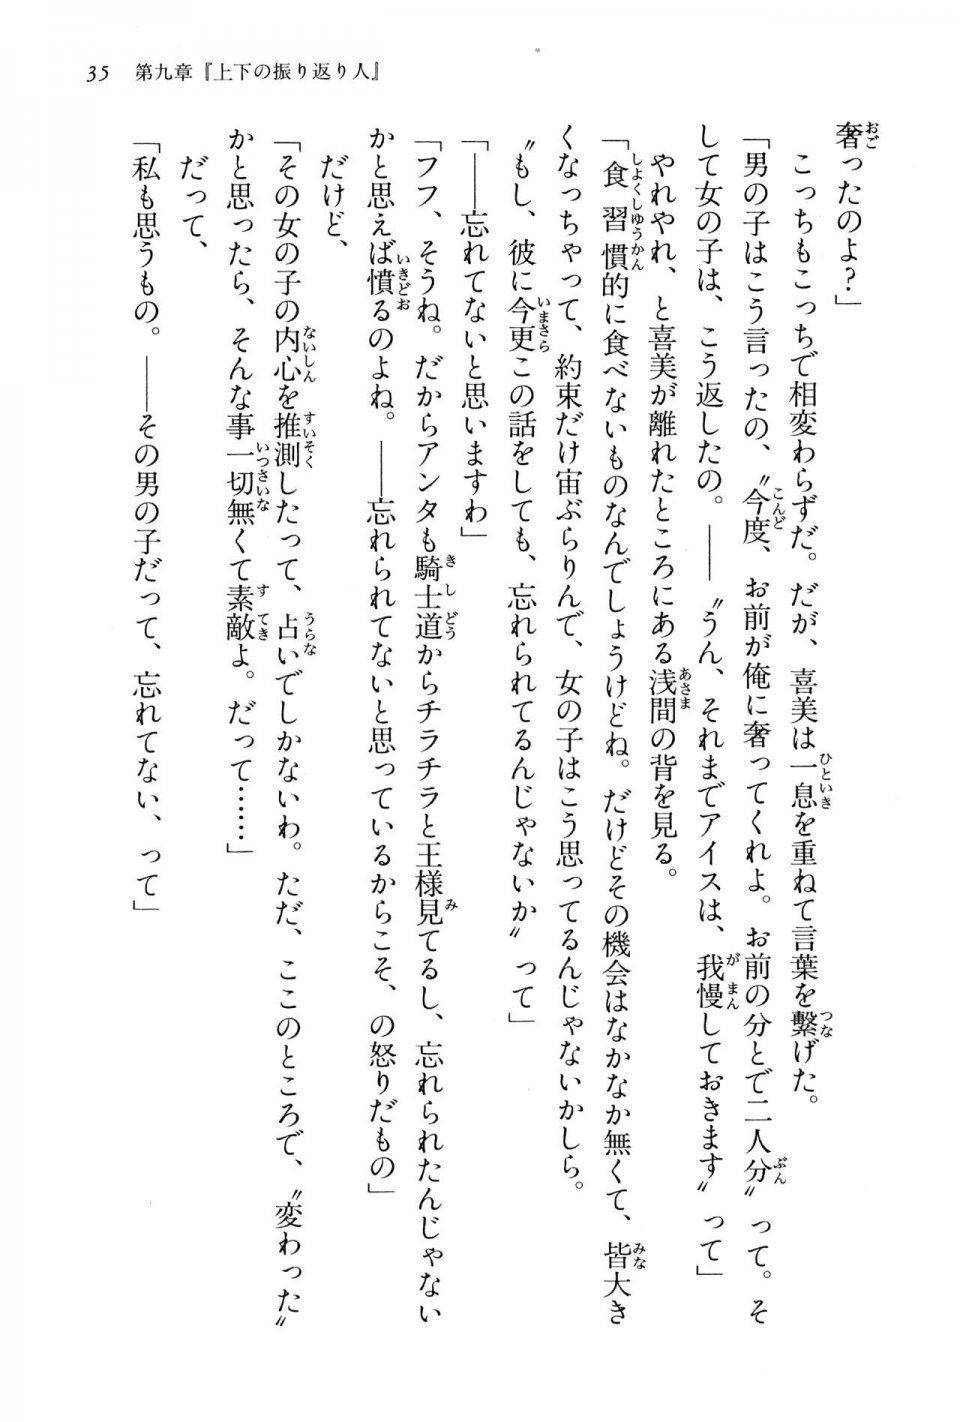 Kyoukai Senjou no Horizon BD Special Mininovel Vol 3(2A) - Photo #39